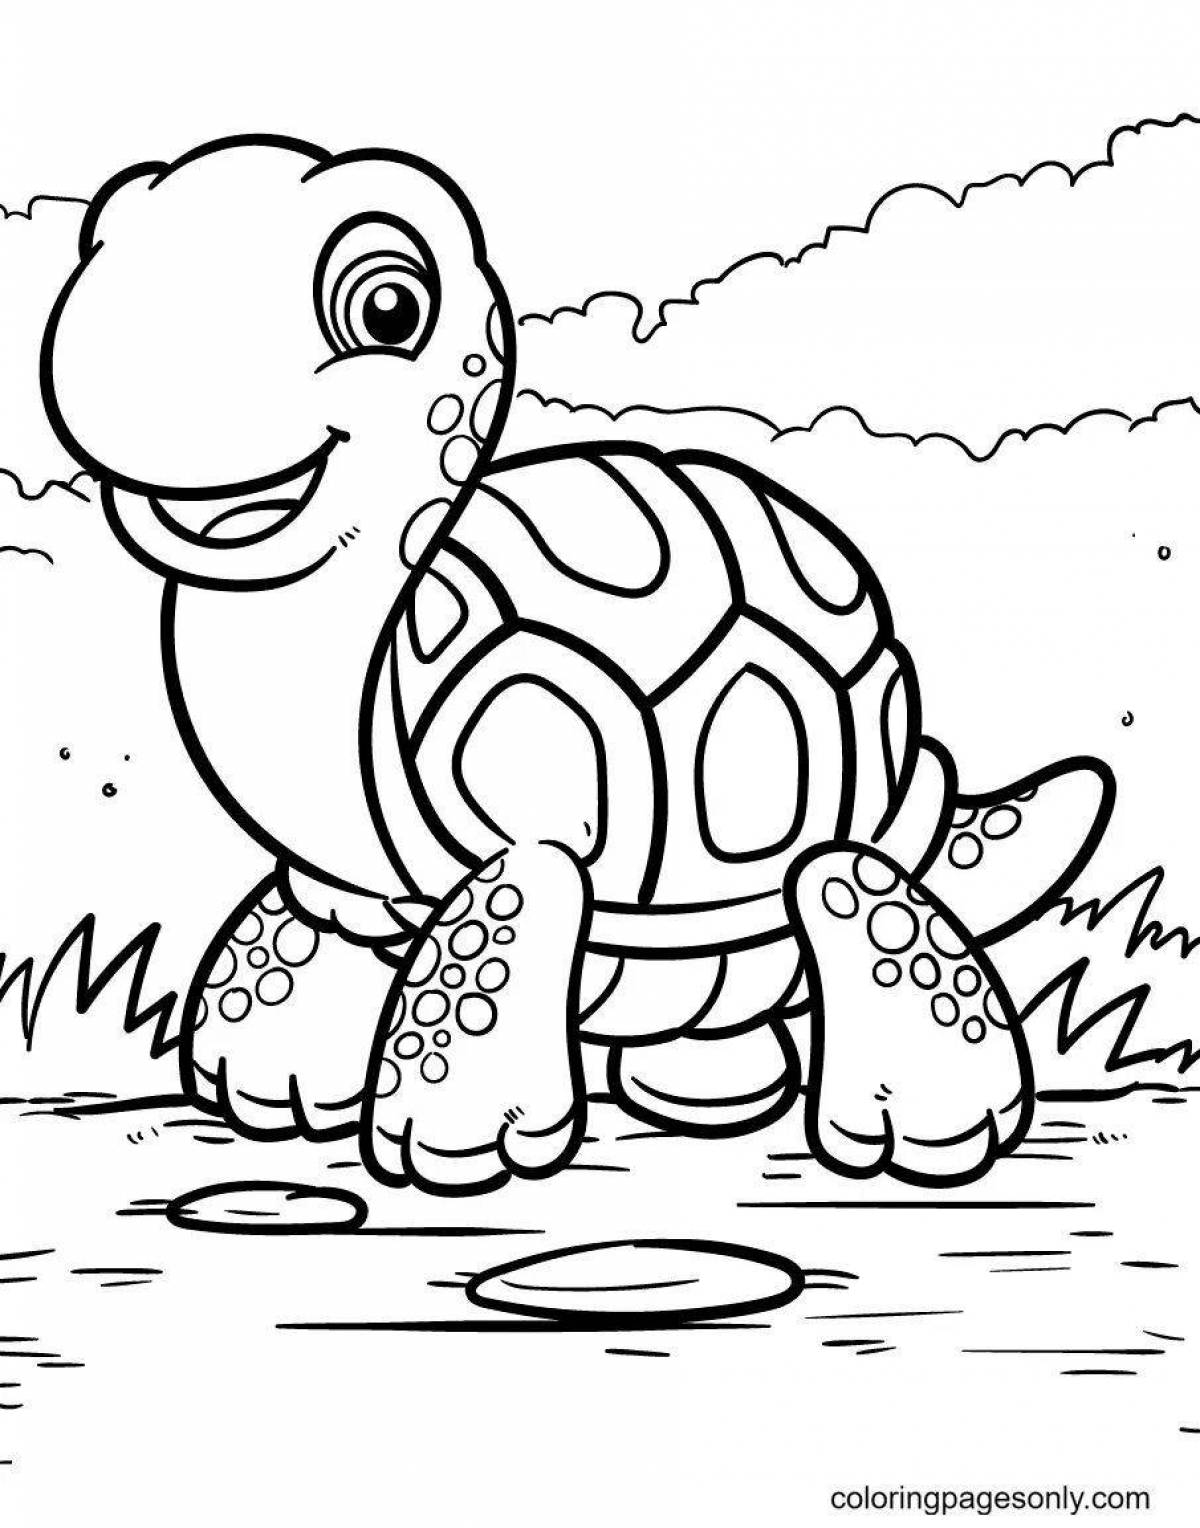 Adorable cute turtle coloring book